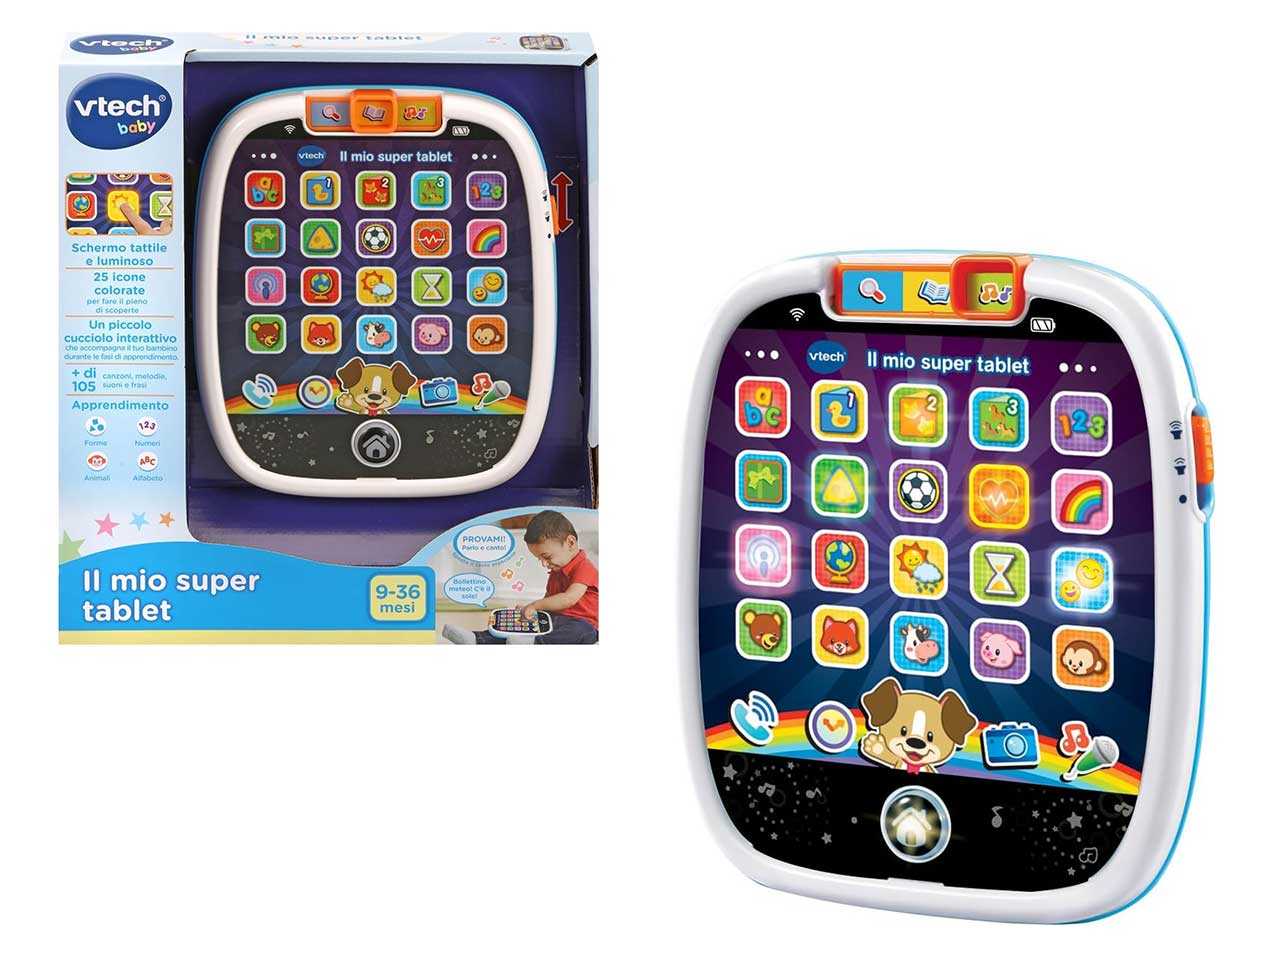 Lisciani-Mio Tab XL 2022, Tablet con Schermo 10 Pollici, 32 GB – The Toys  Store